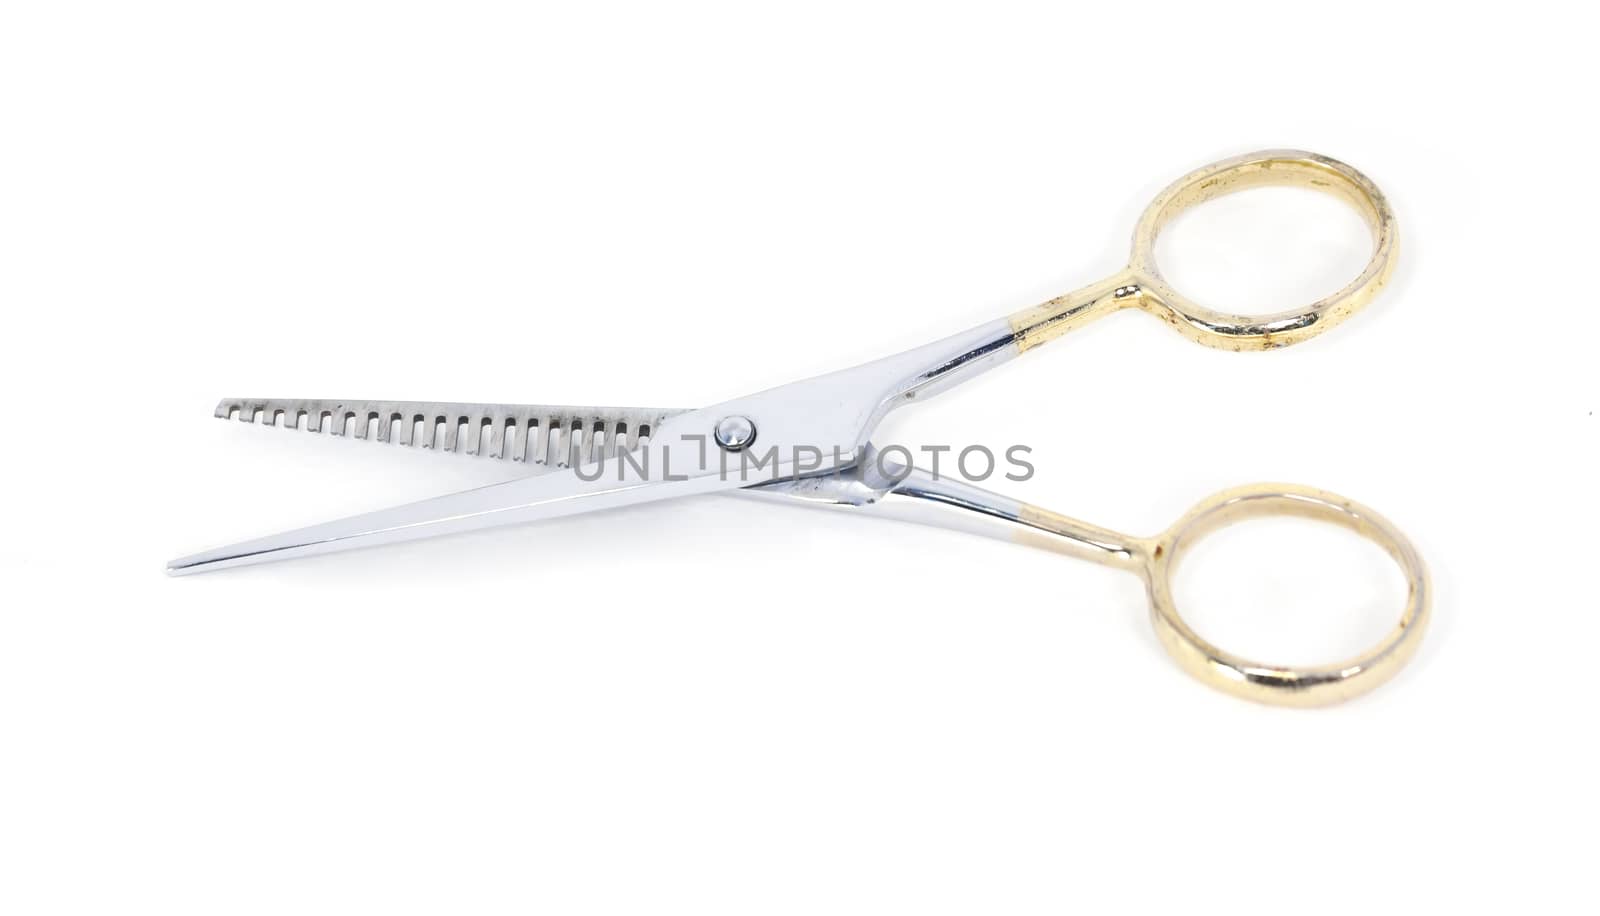 Hair scissors by dontpoke